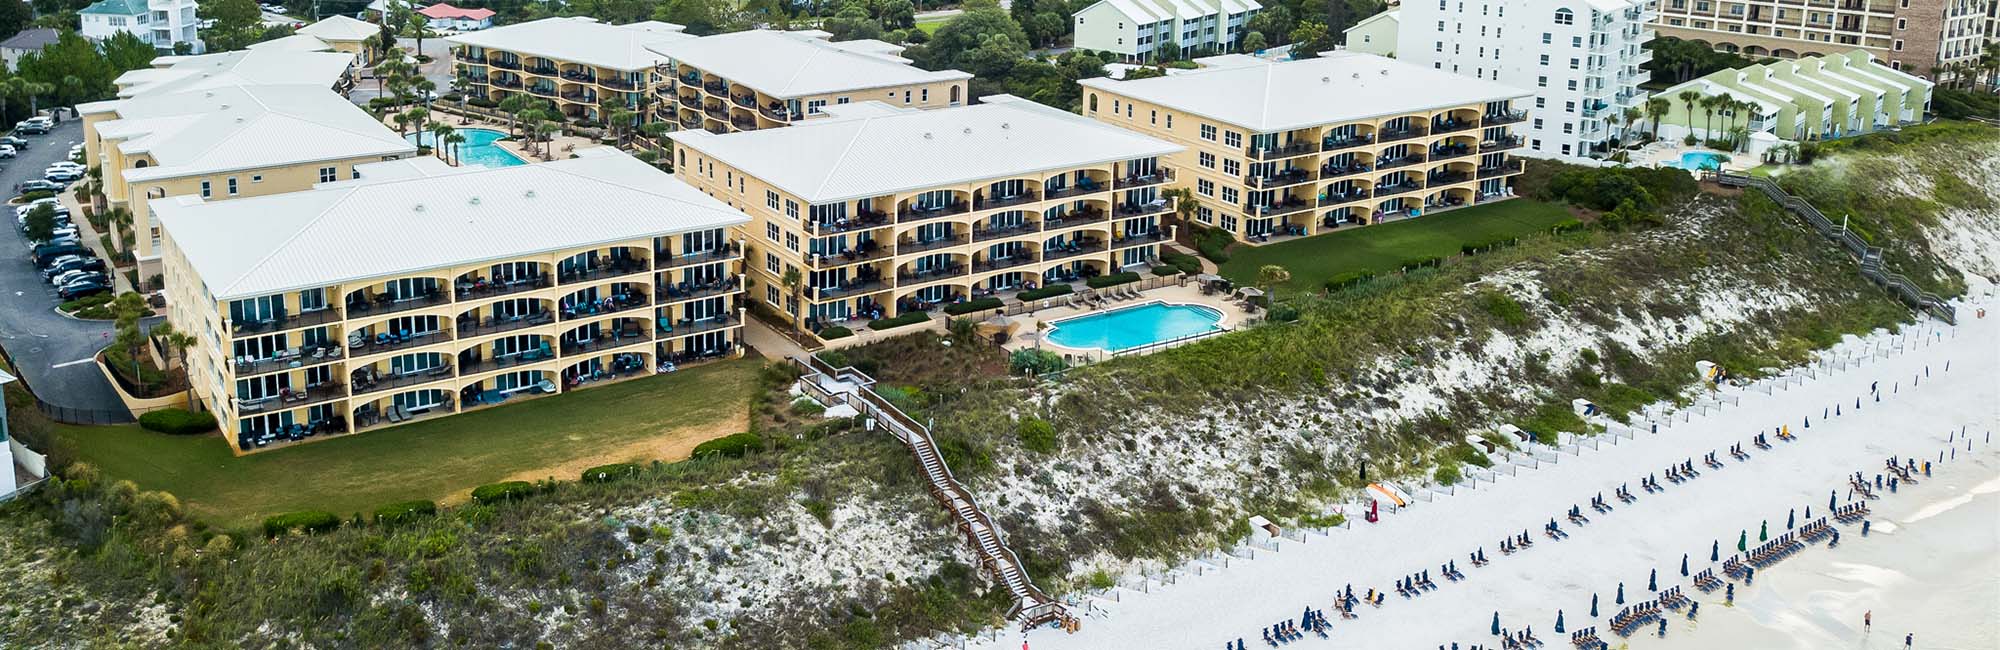 Adagio vacation condo rentals on the Gulf of Mexico